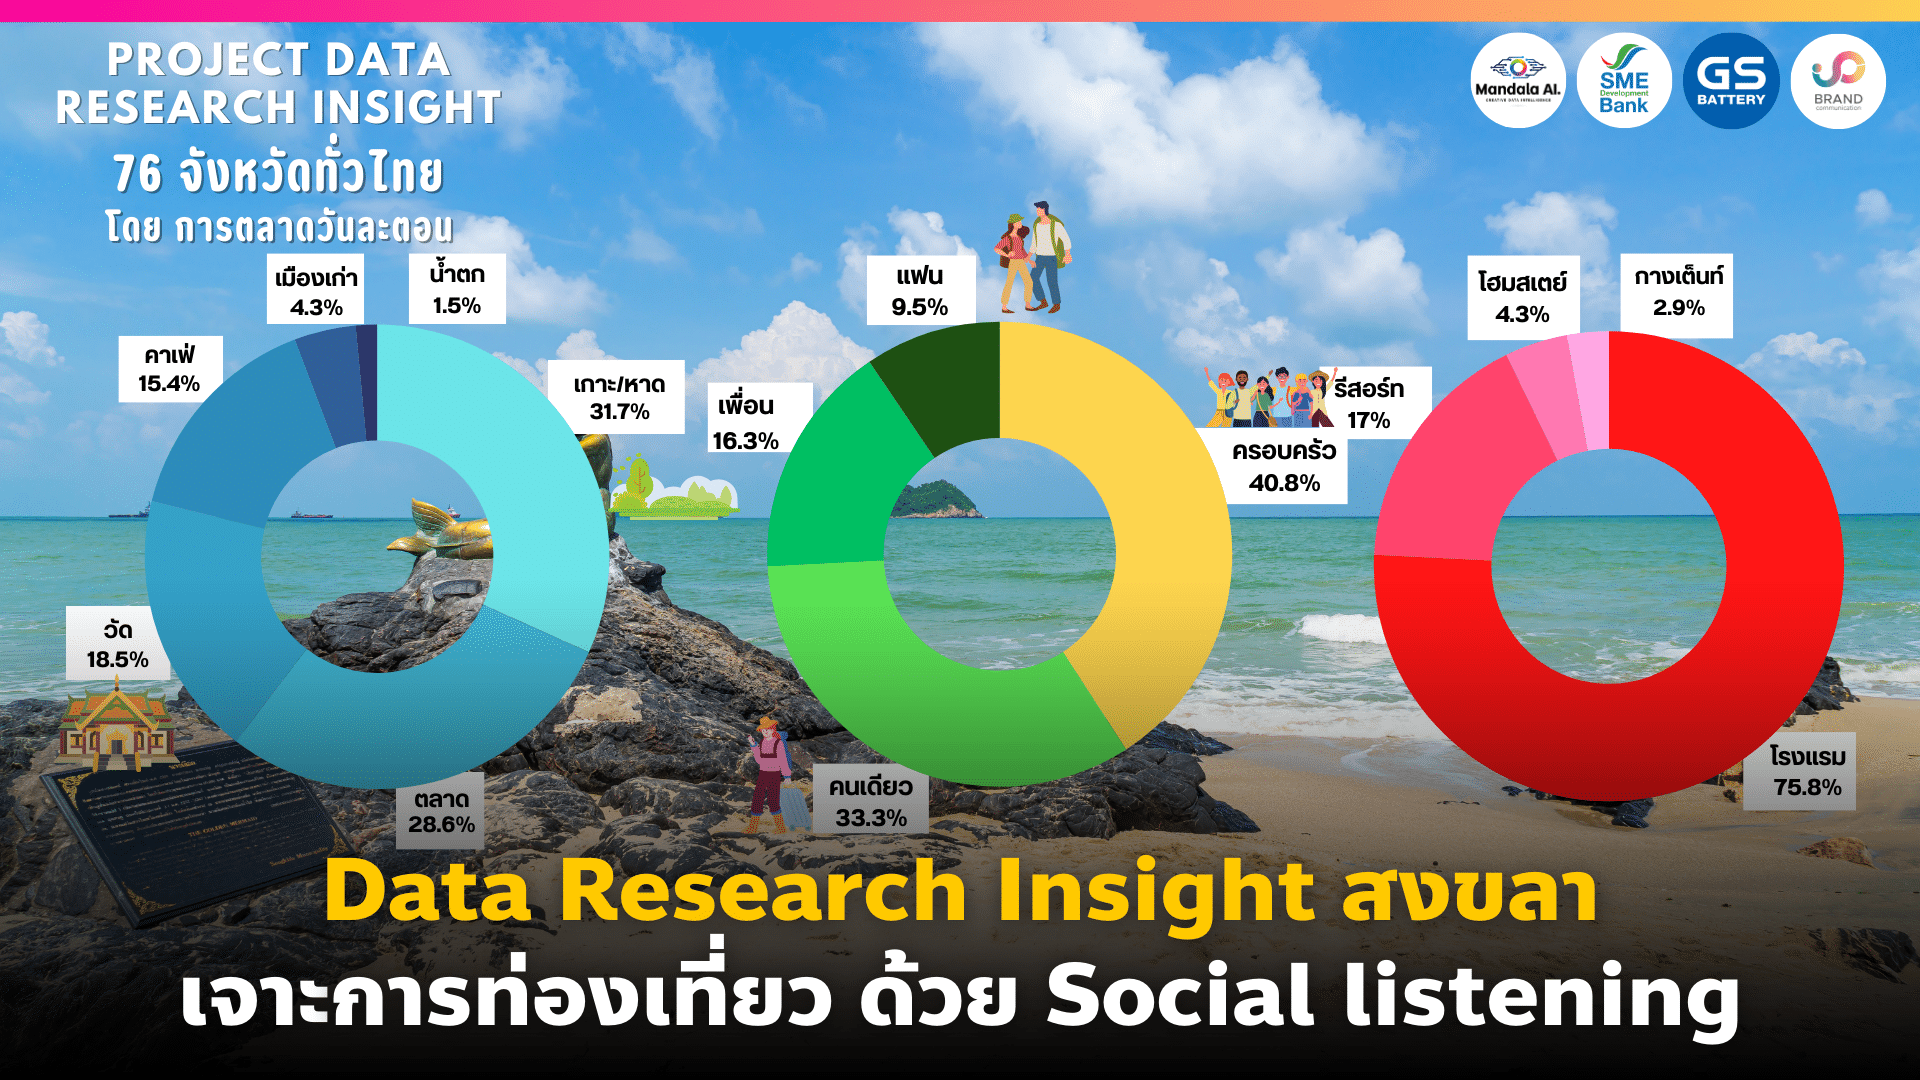 Data Research Insight สงขลา เจาะการท่องเที่ยวด้วย Social listening